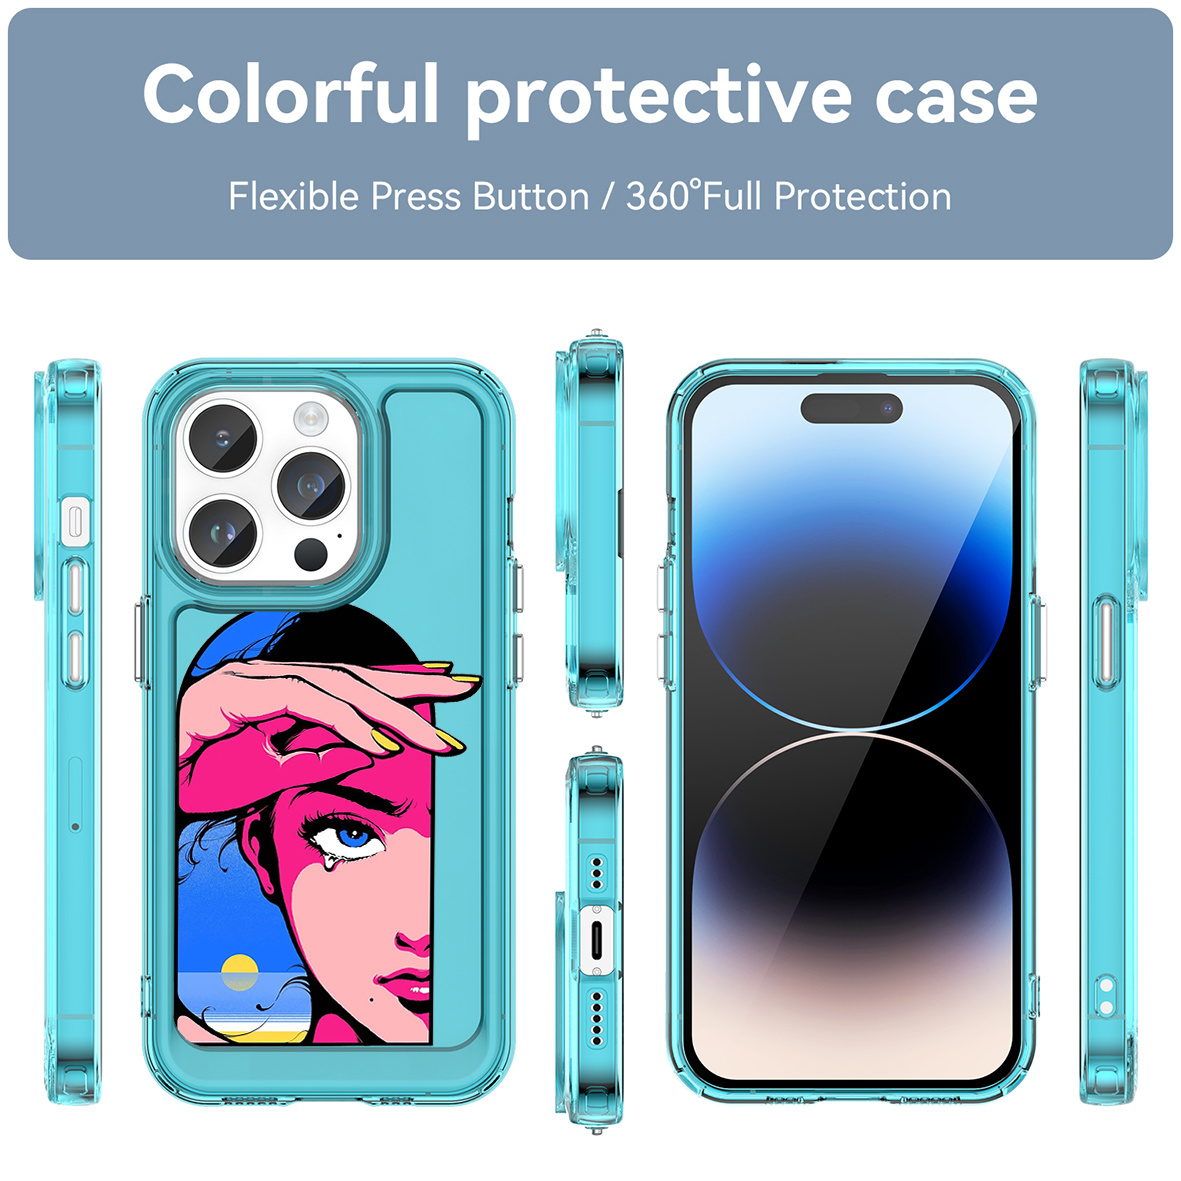 Protector cover funda para el Iphone 13 Pro Max Case Cover Moda